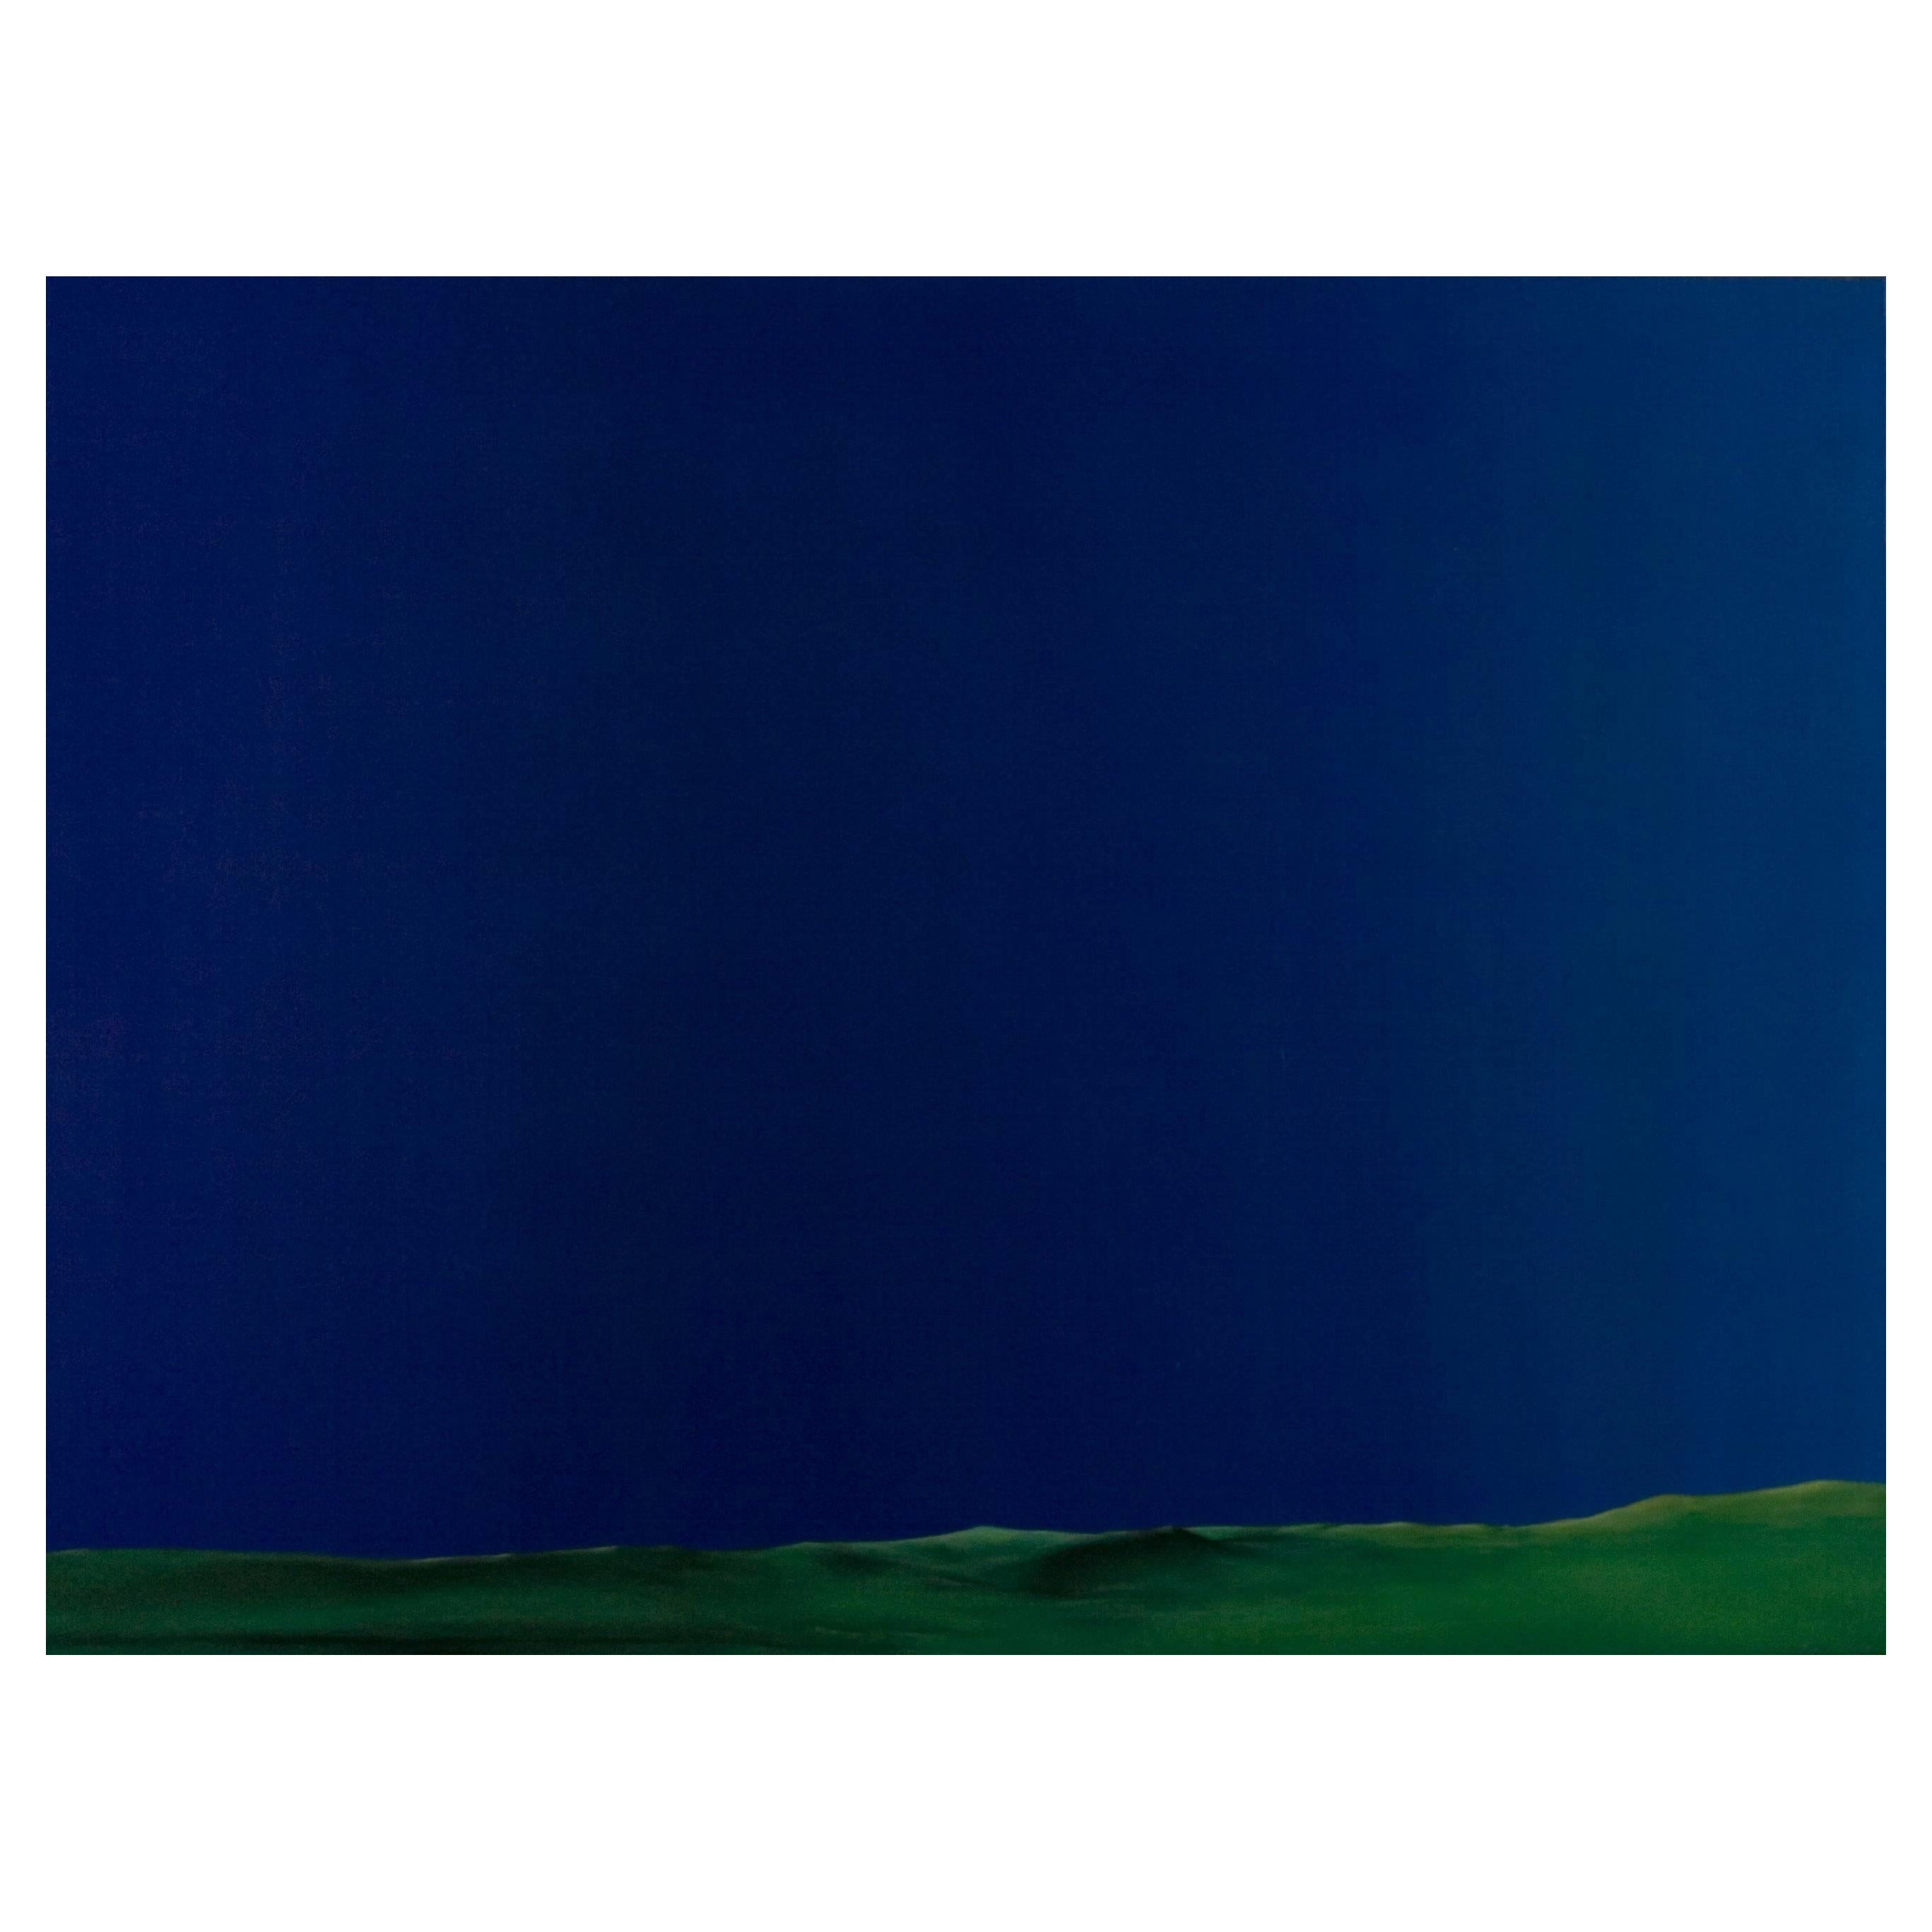 Chroma sky (Blue key) 10 - Contemporary, Blau, Minimalistisch, Figurativ, Landschaft